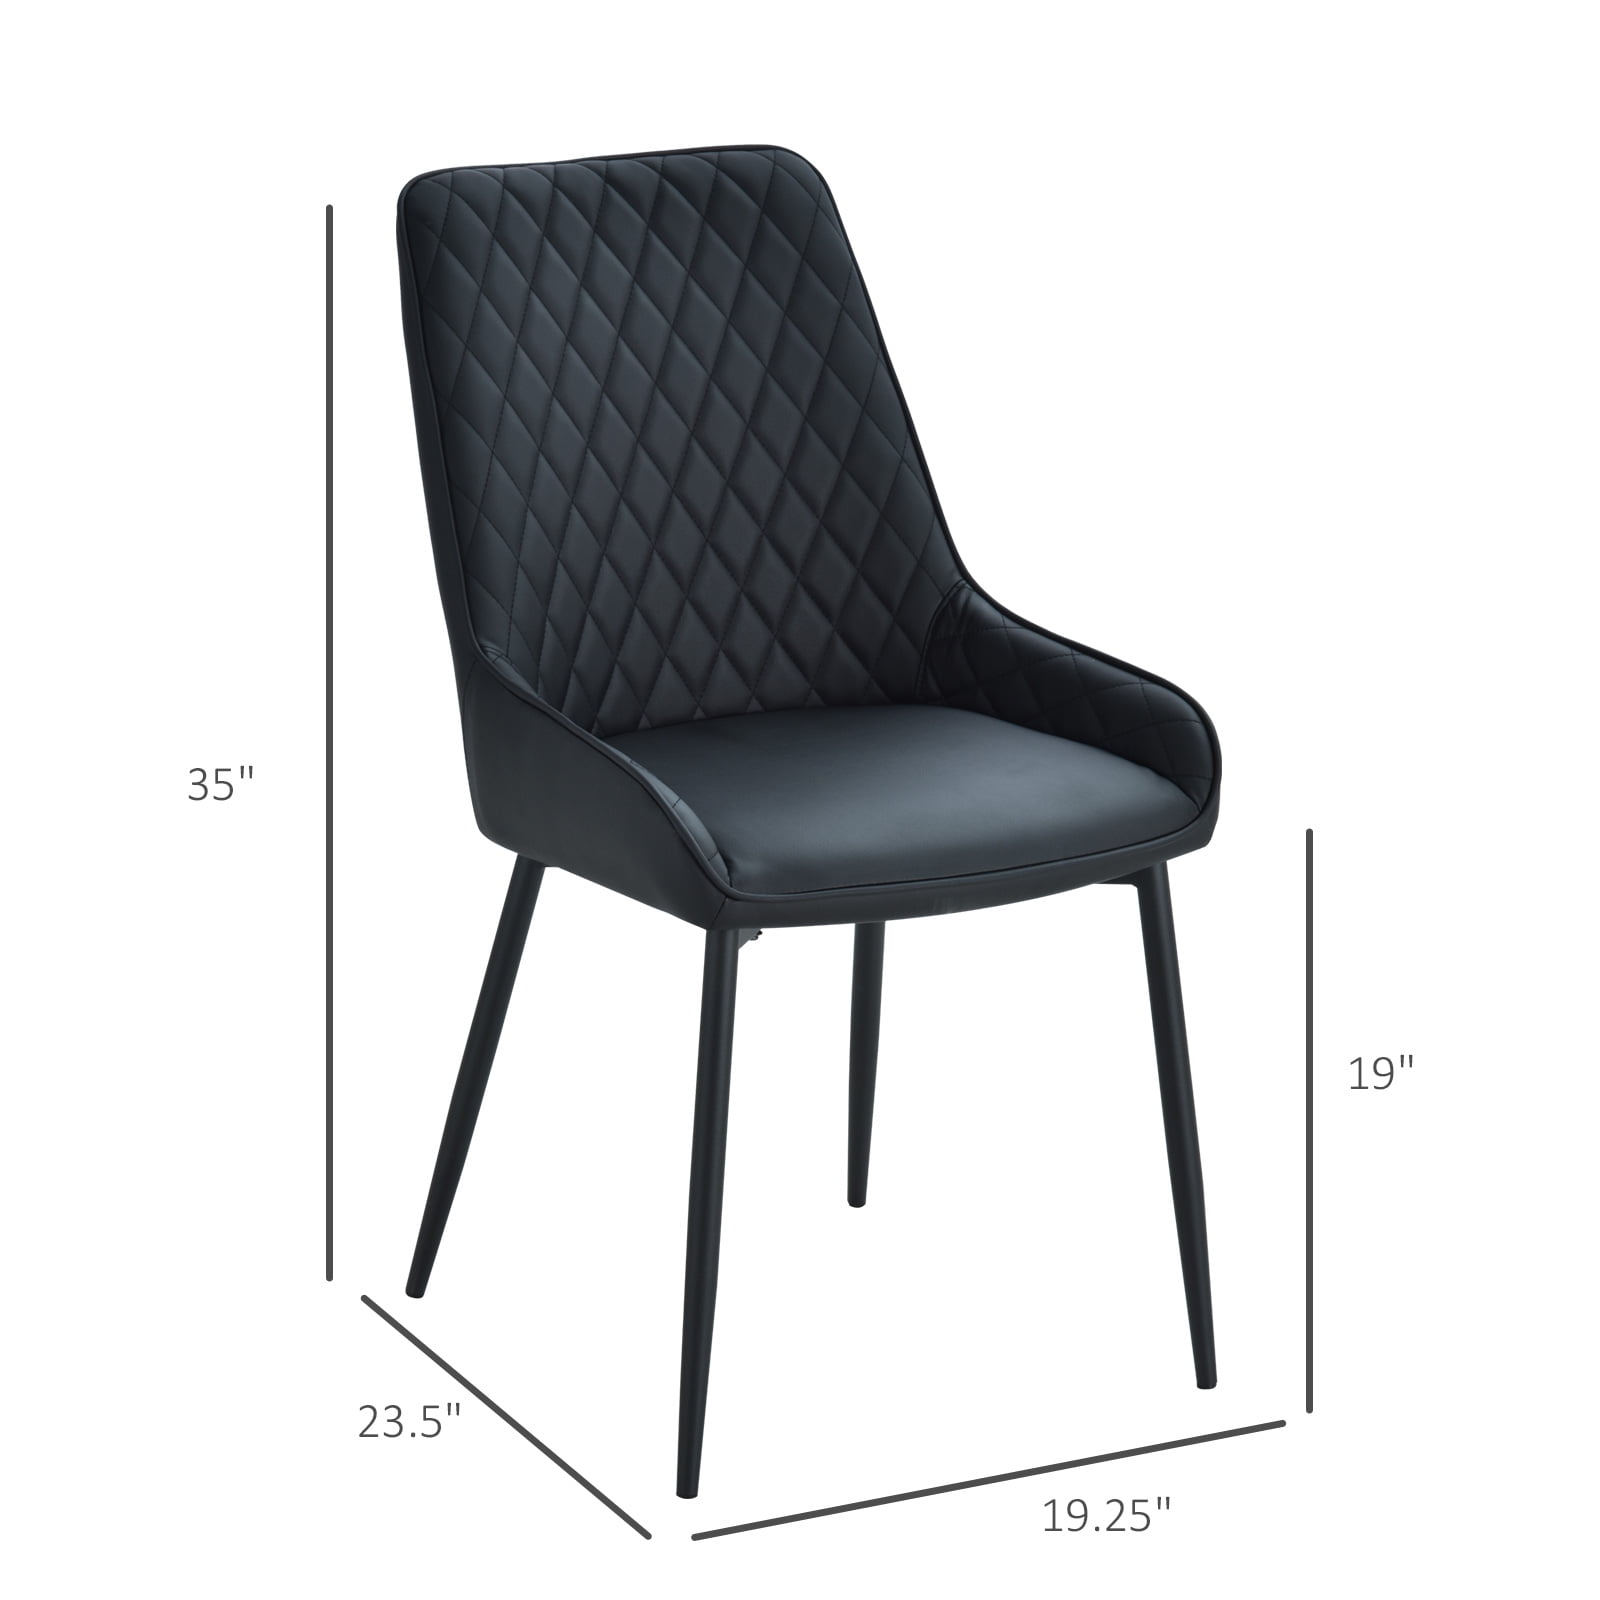 HOMCOM 2 Piece Mid Century Modern Dining Chair PU Leather Metal Legs,Black